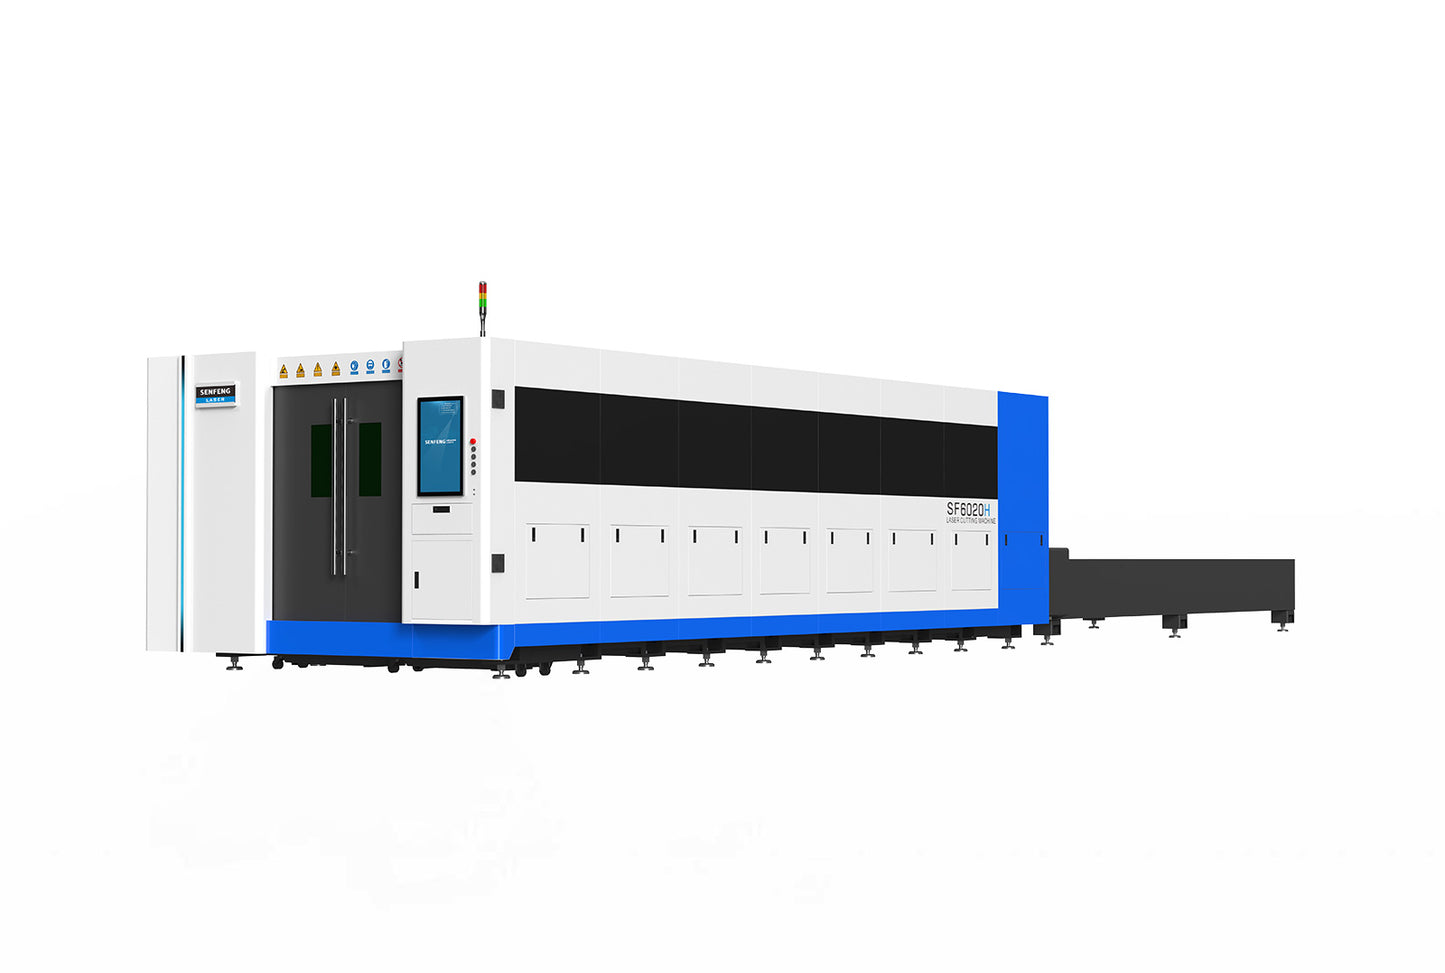 Senfeng SF3015H4 Laser Cutting machine